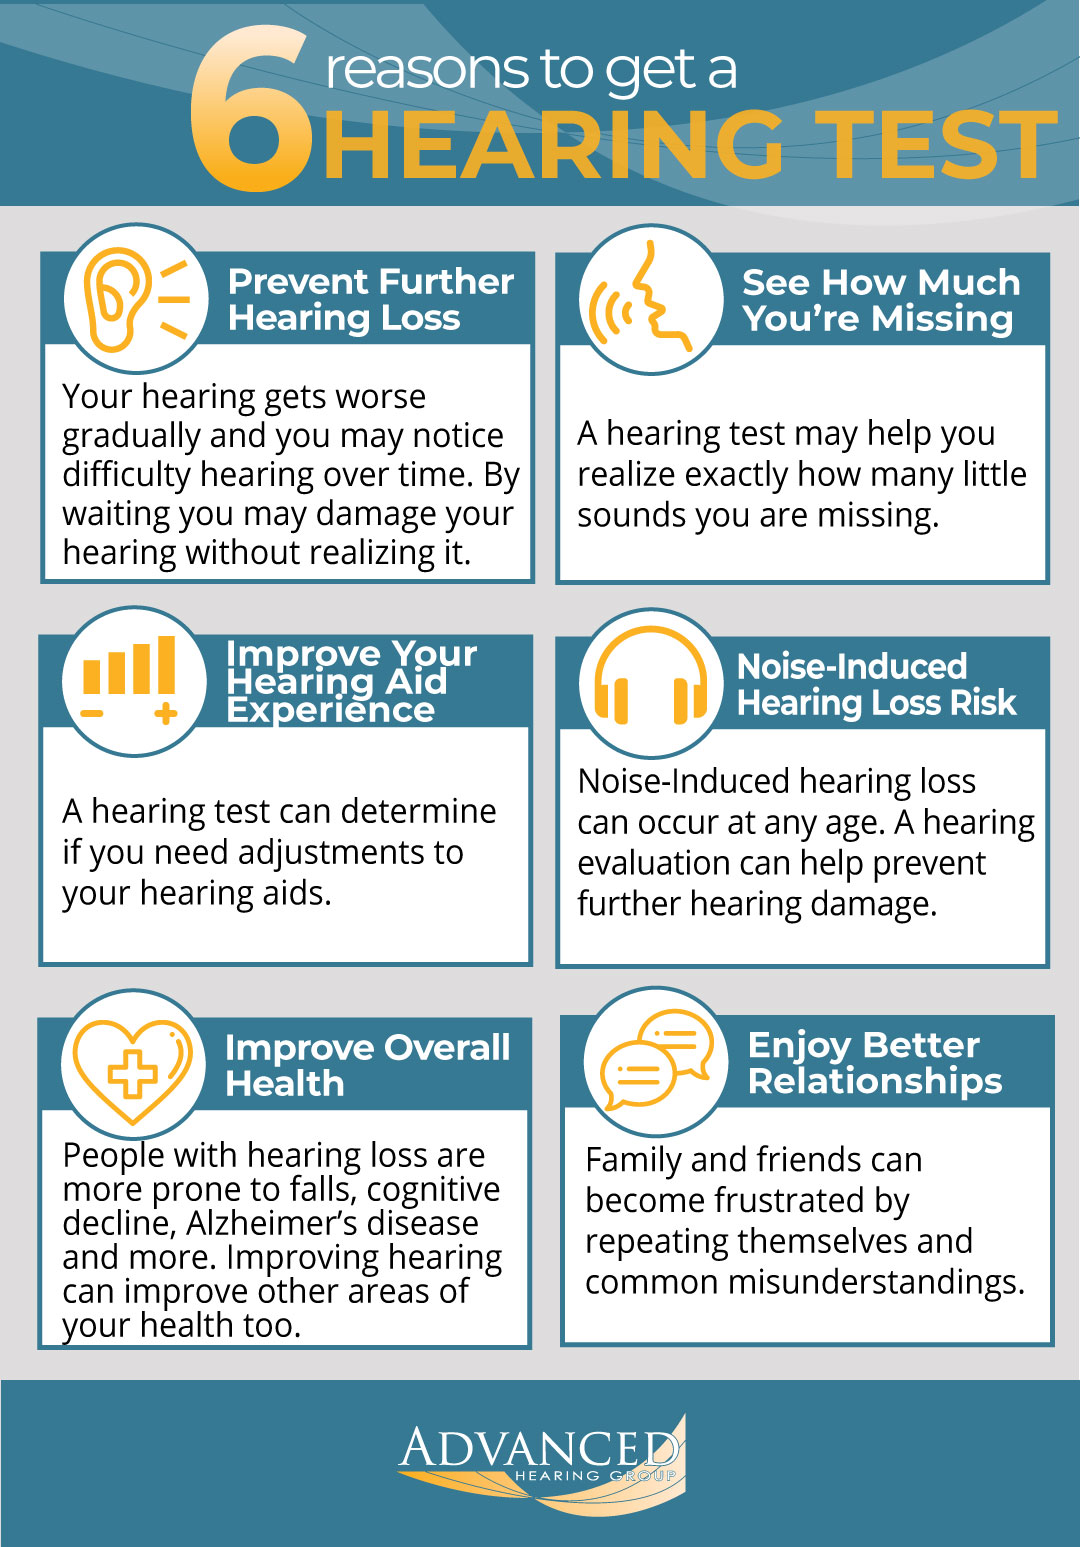 ahg-hearing-test-infographic-hear-well-live-wellhear-well-live-well